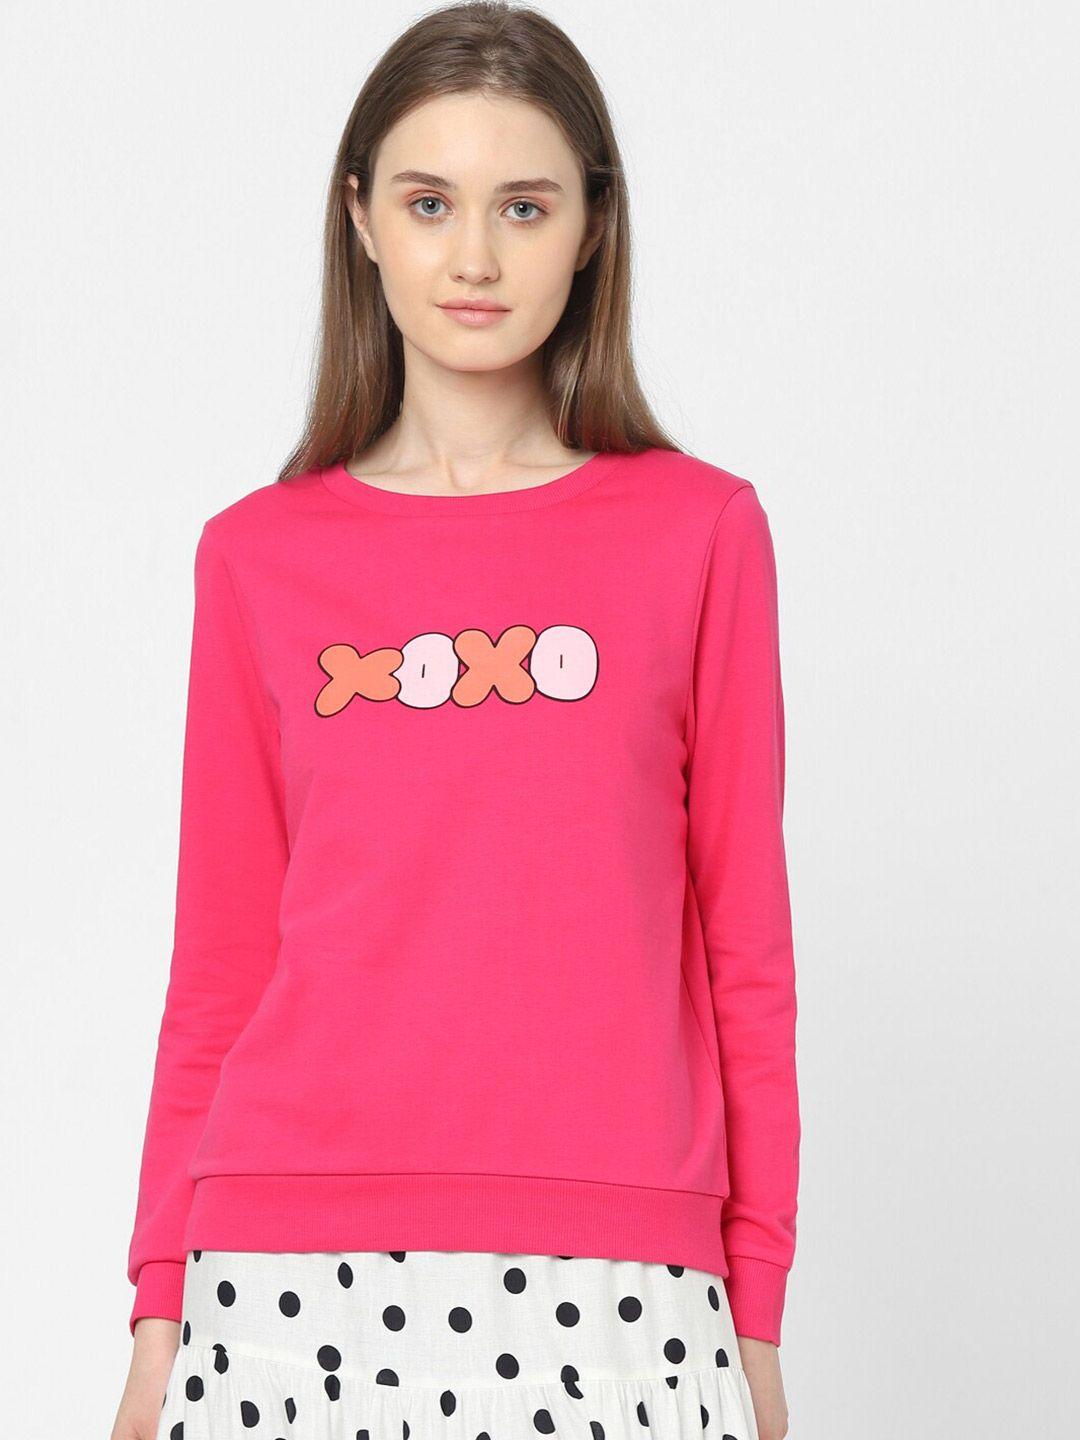 vero moda women pink printed sweatshirt